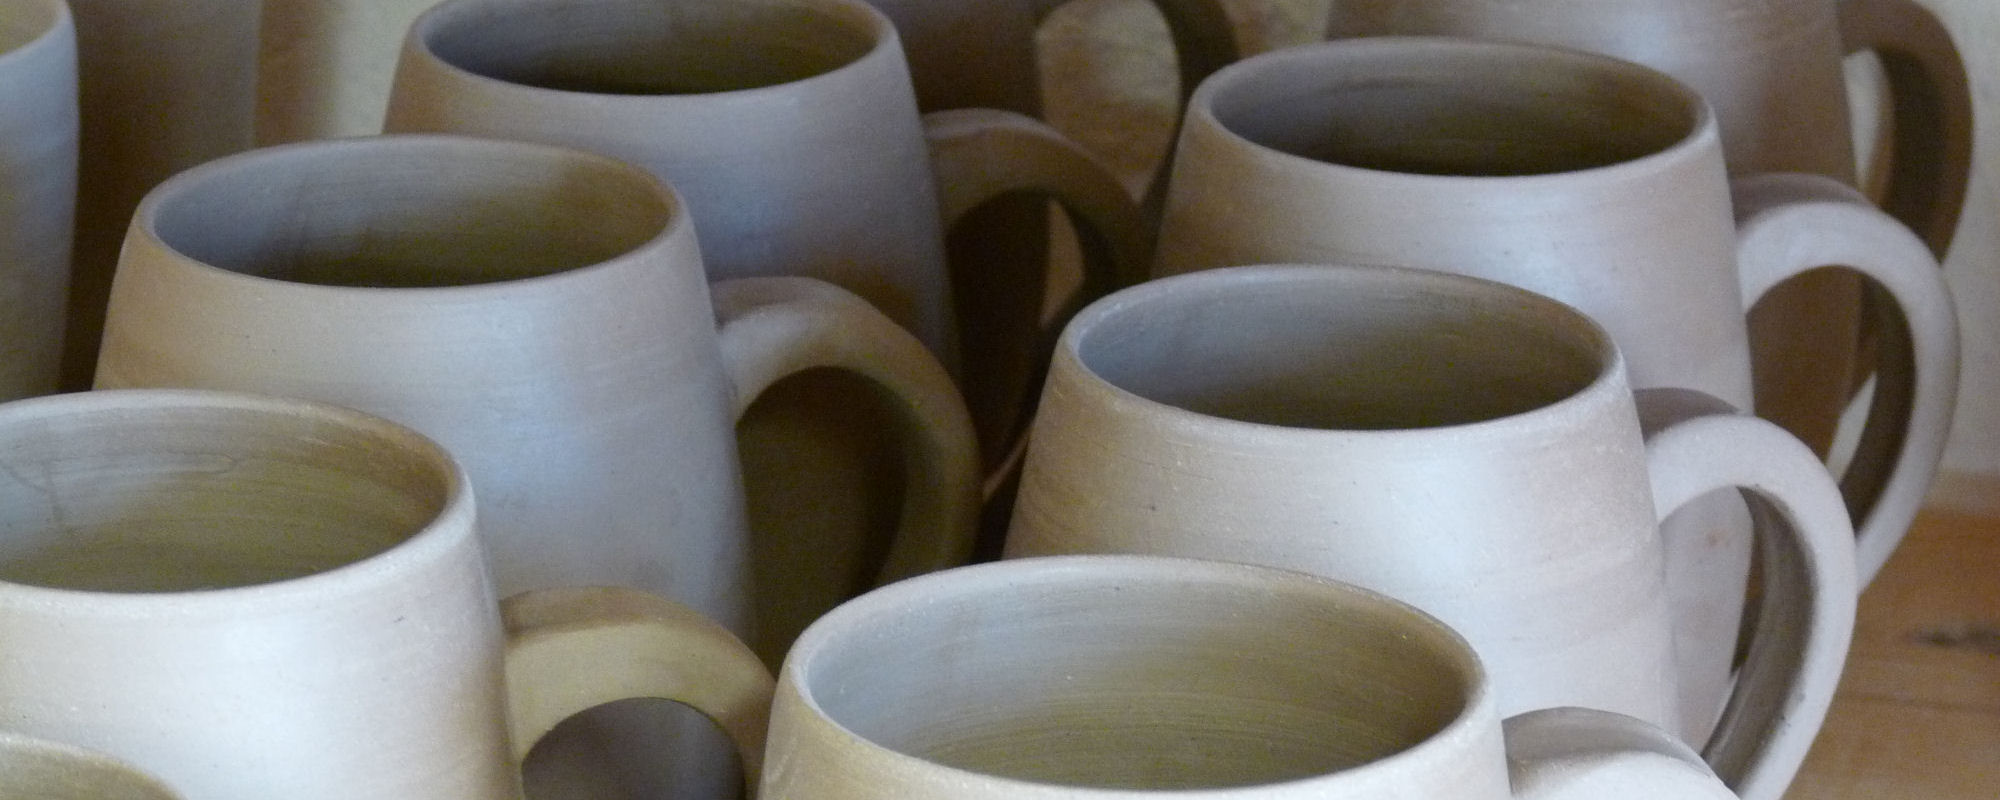 Making mugs